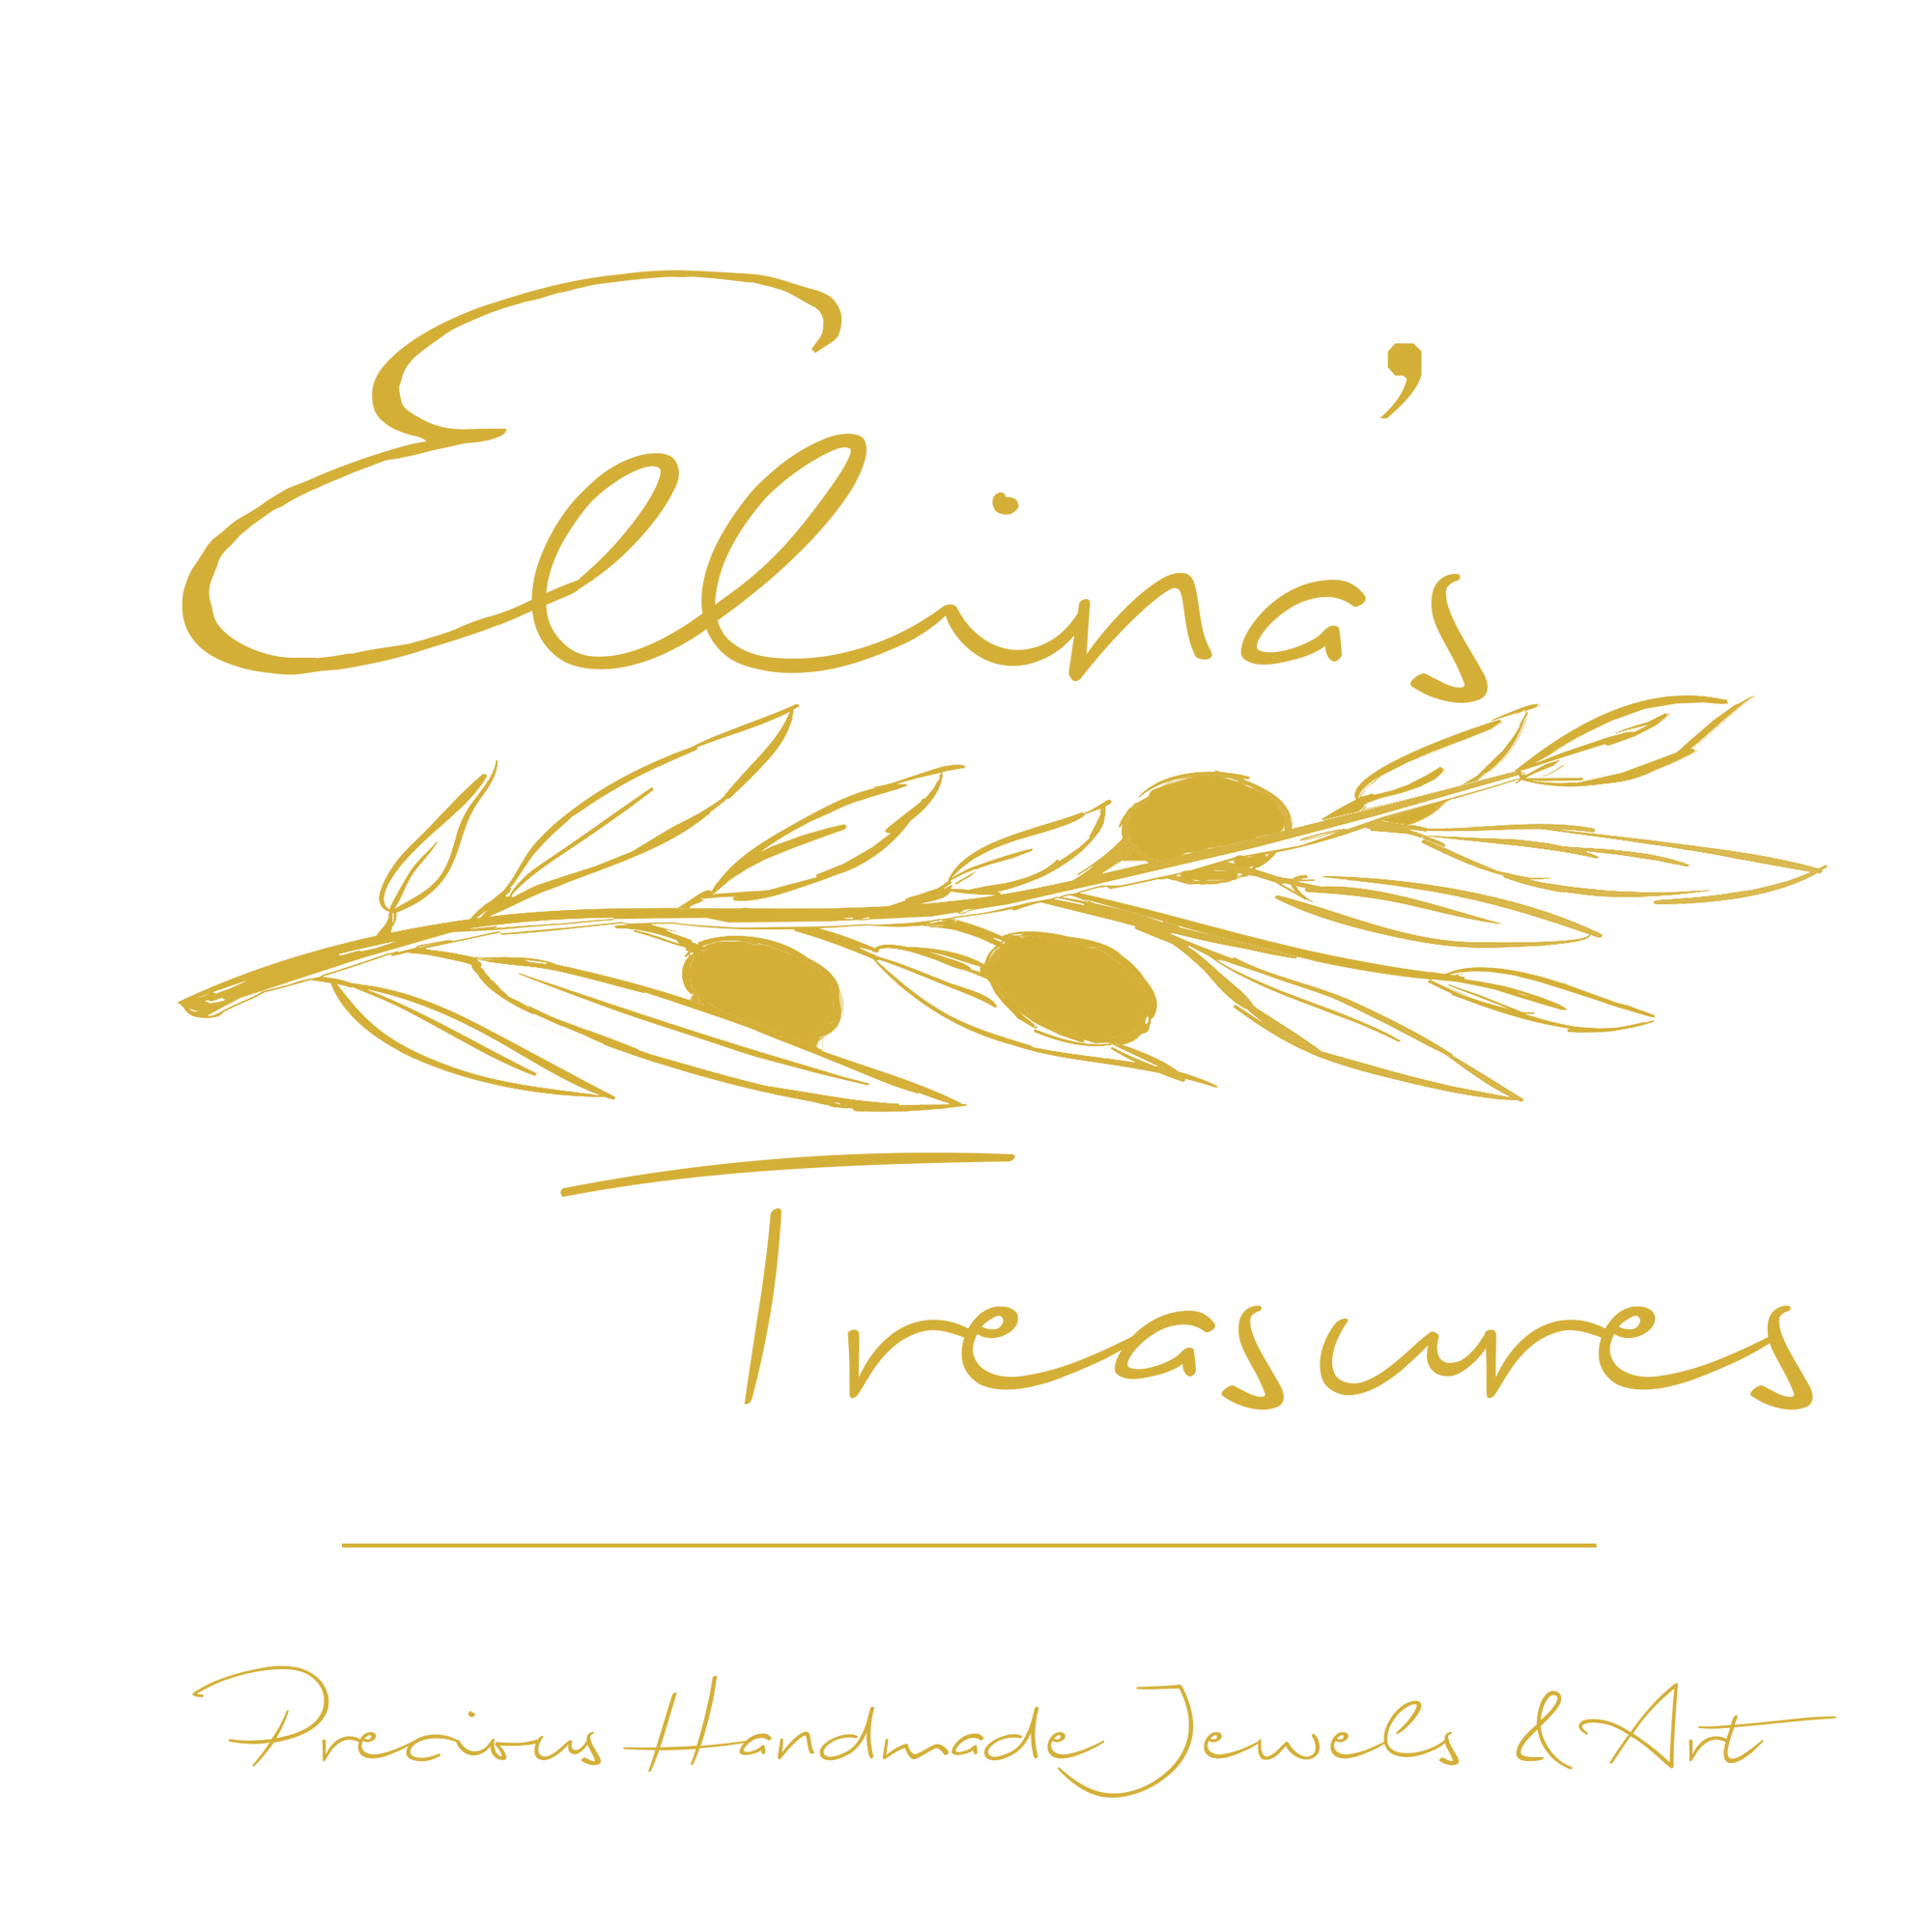 ELLINA'S TREASURES